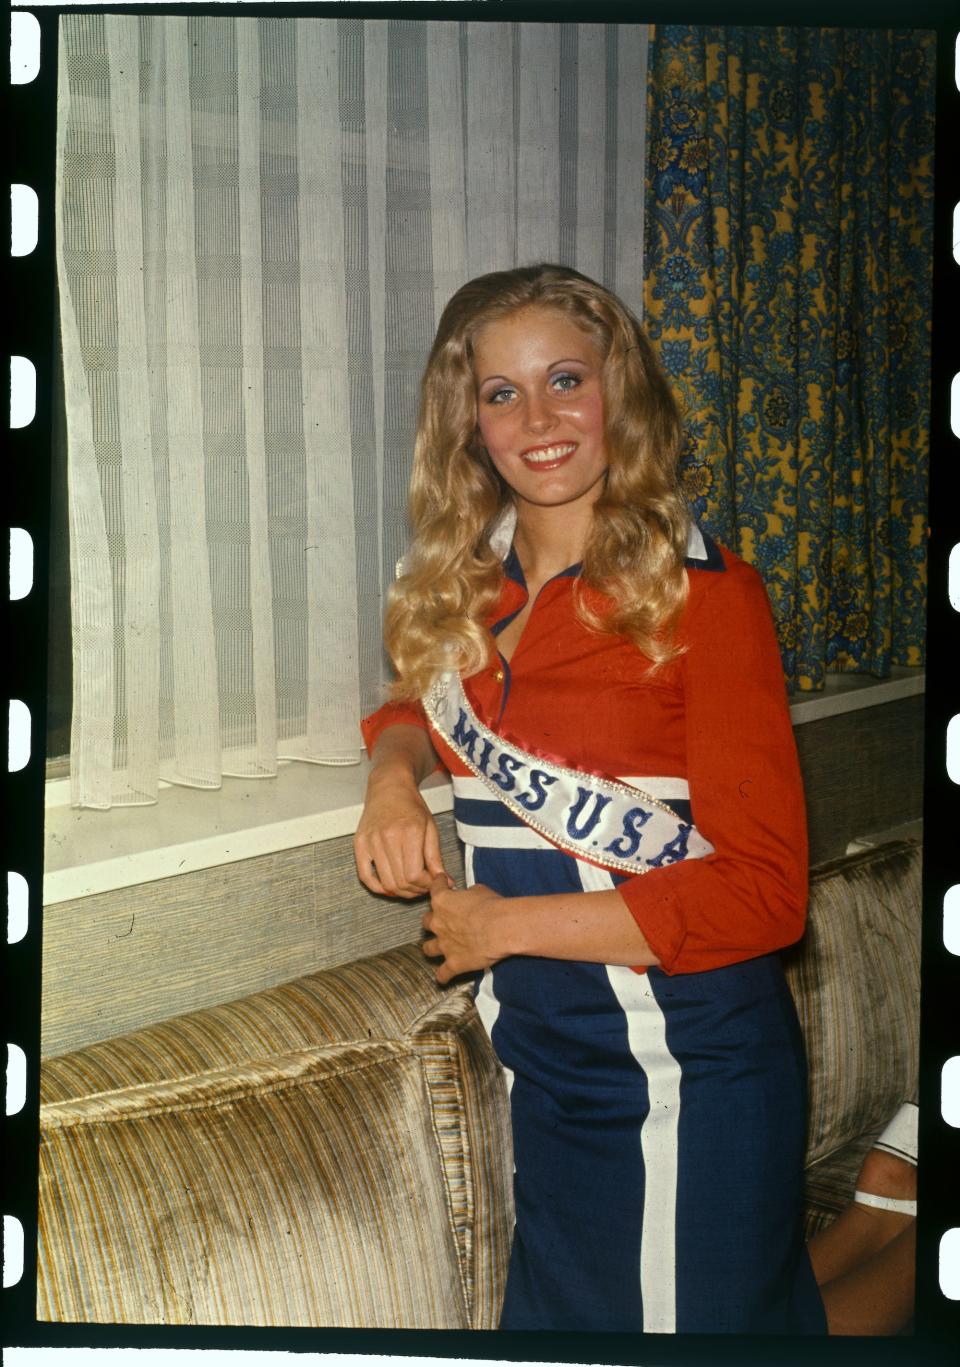 Miss USA 1974 Karen Jean Morrison poses in her sash near a window.